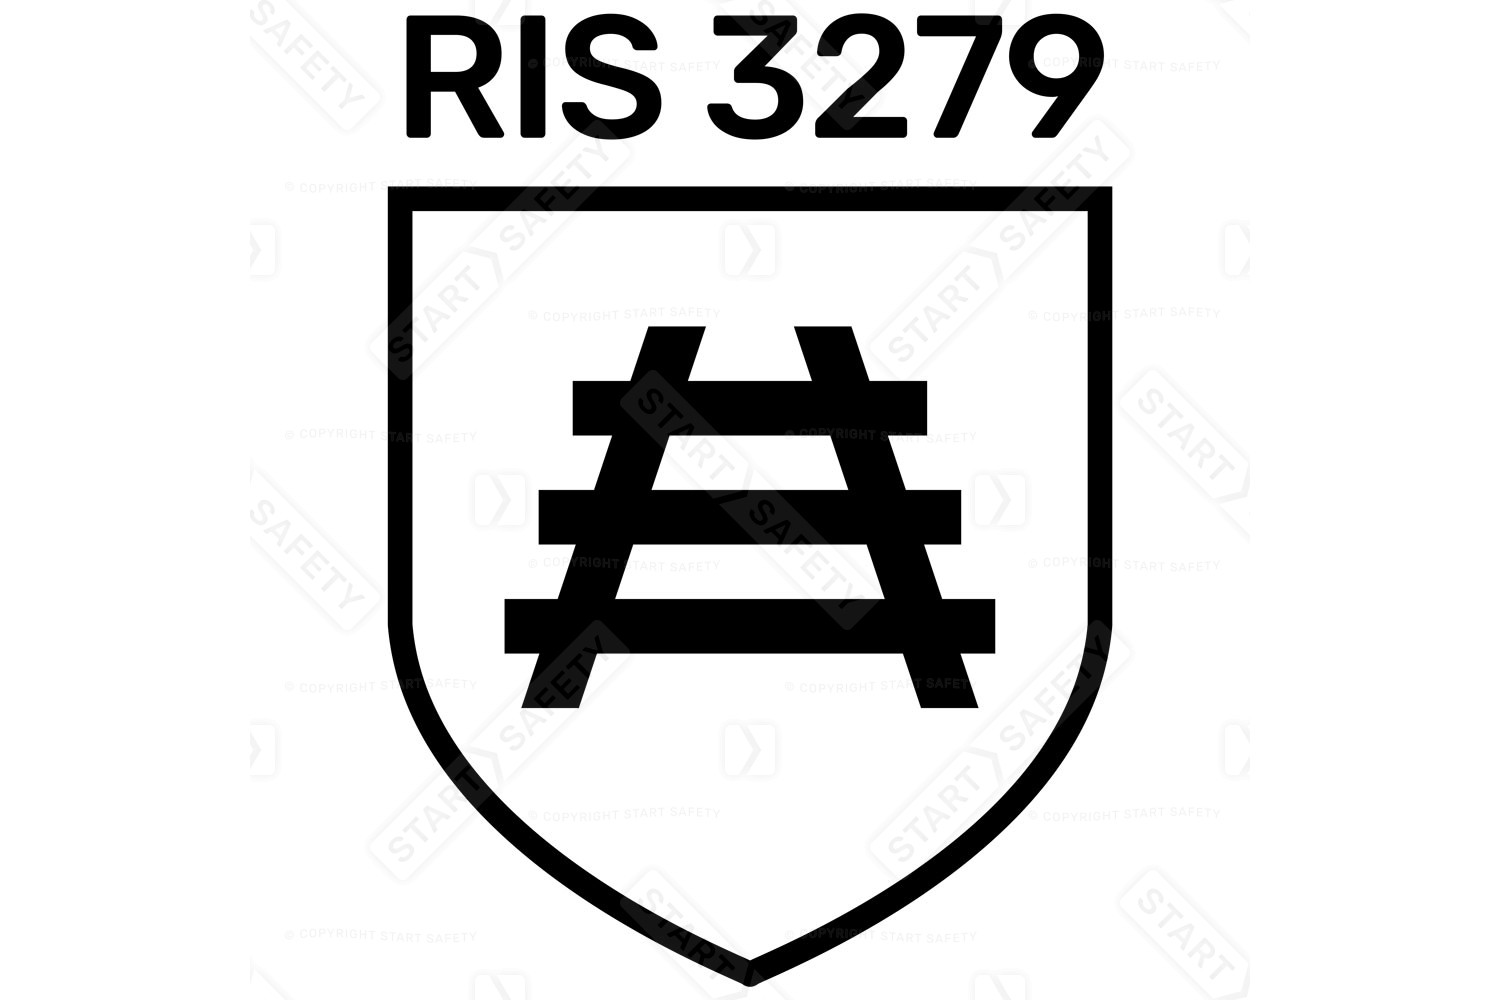 RIS3279 Railway Workwear Standard Symbol